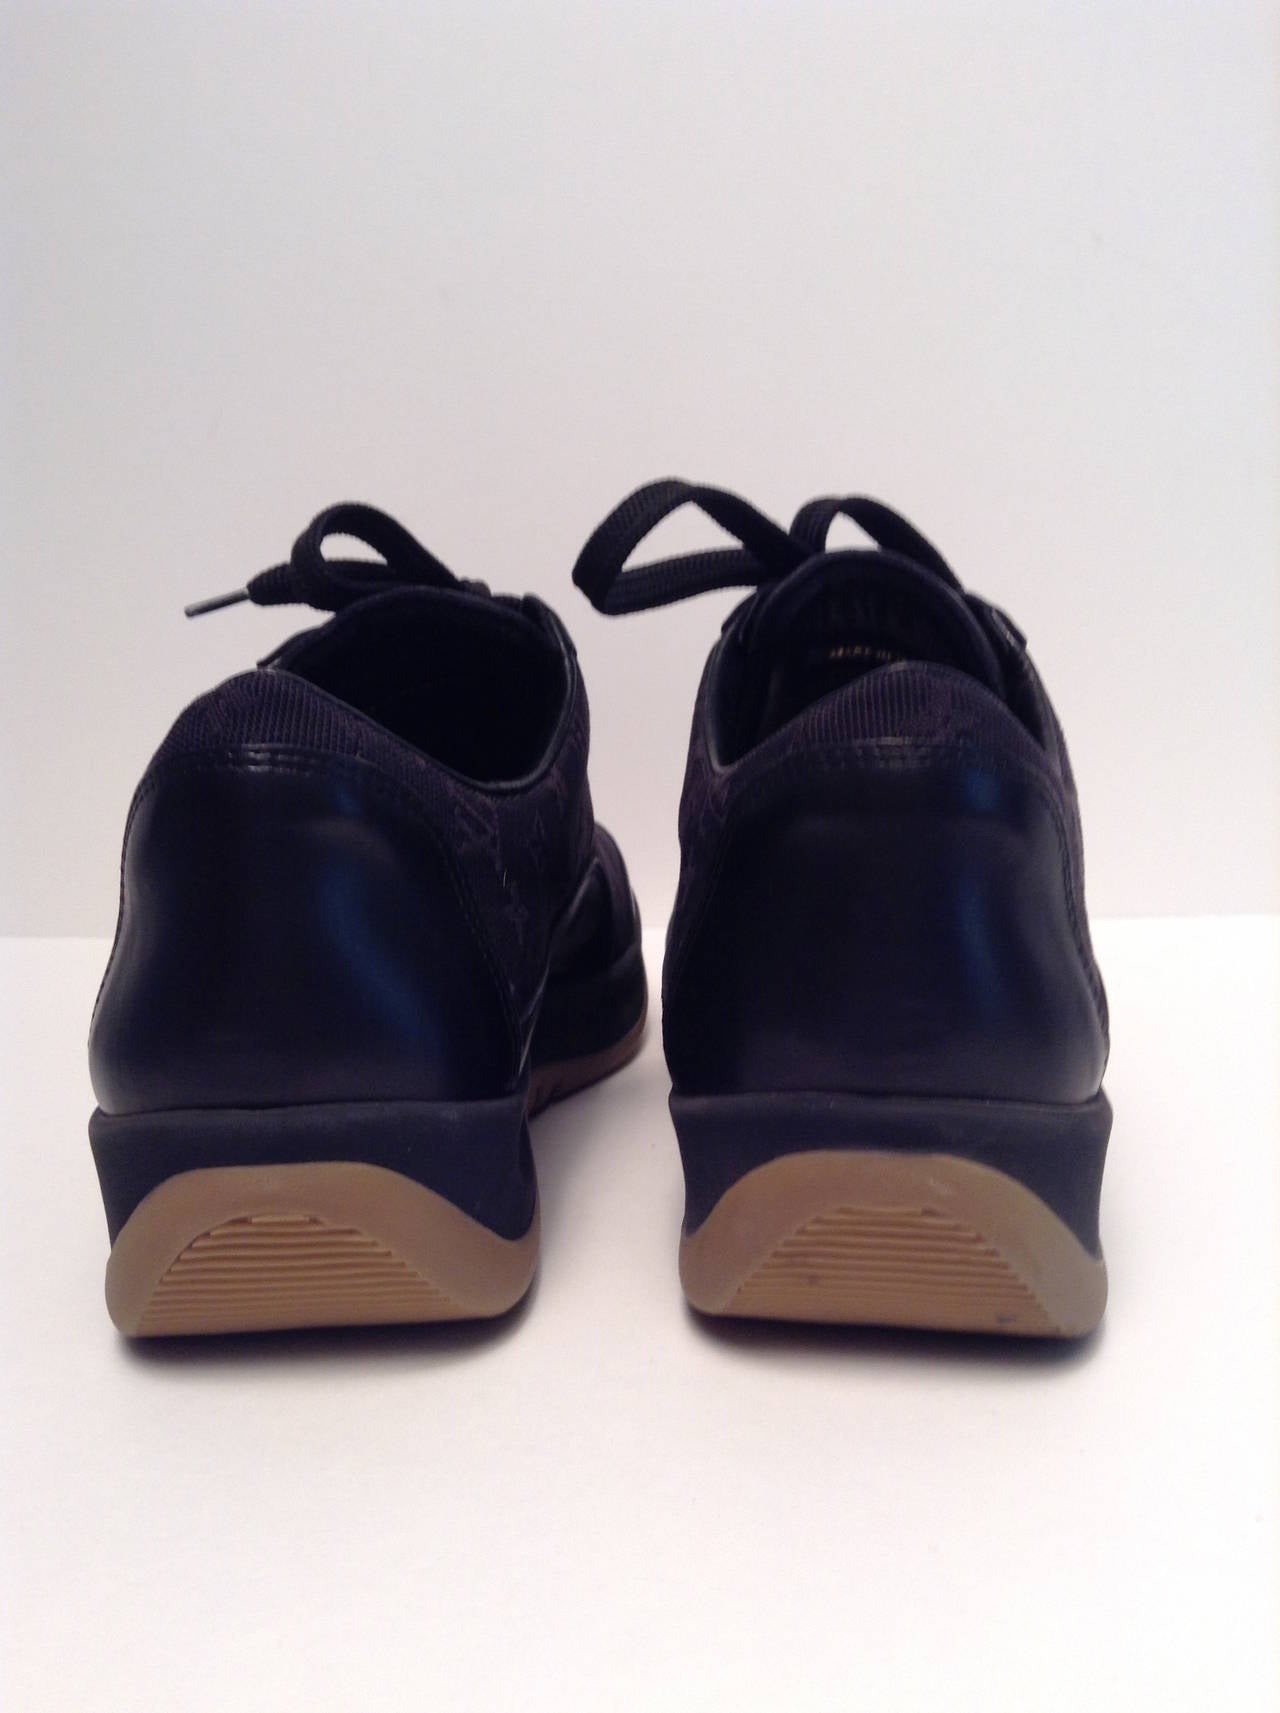 Louis Vuitton Black Monogram Sneakers Size 40 3